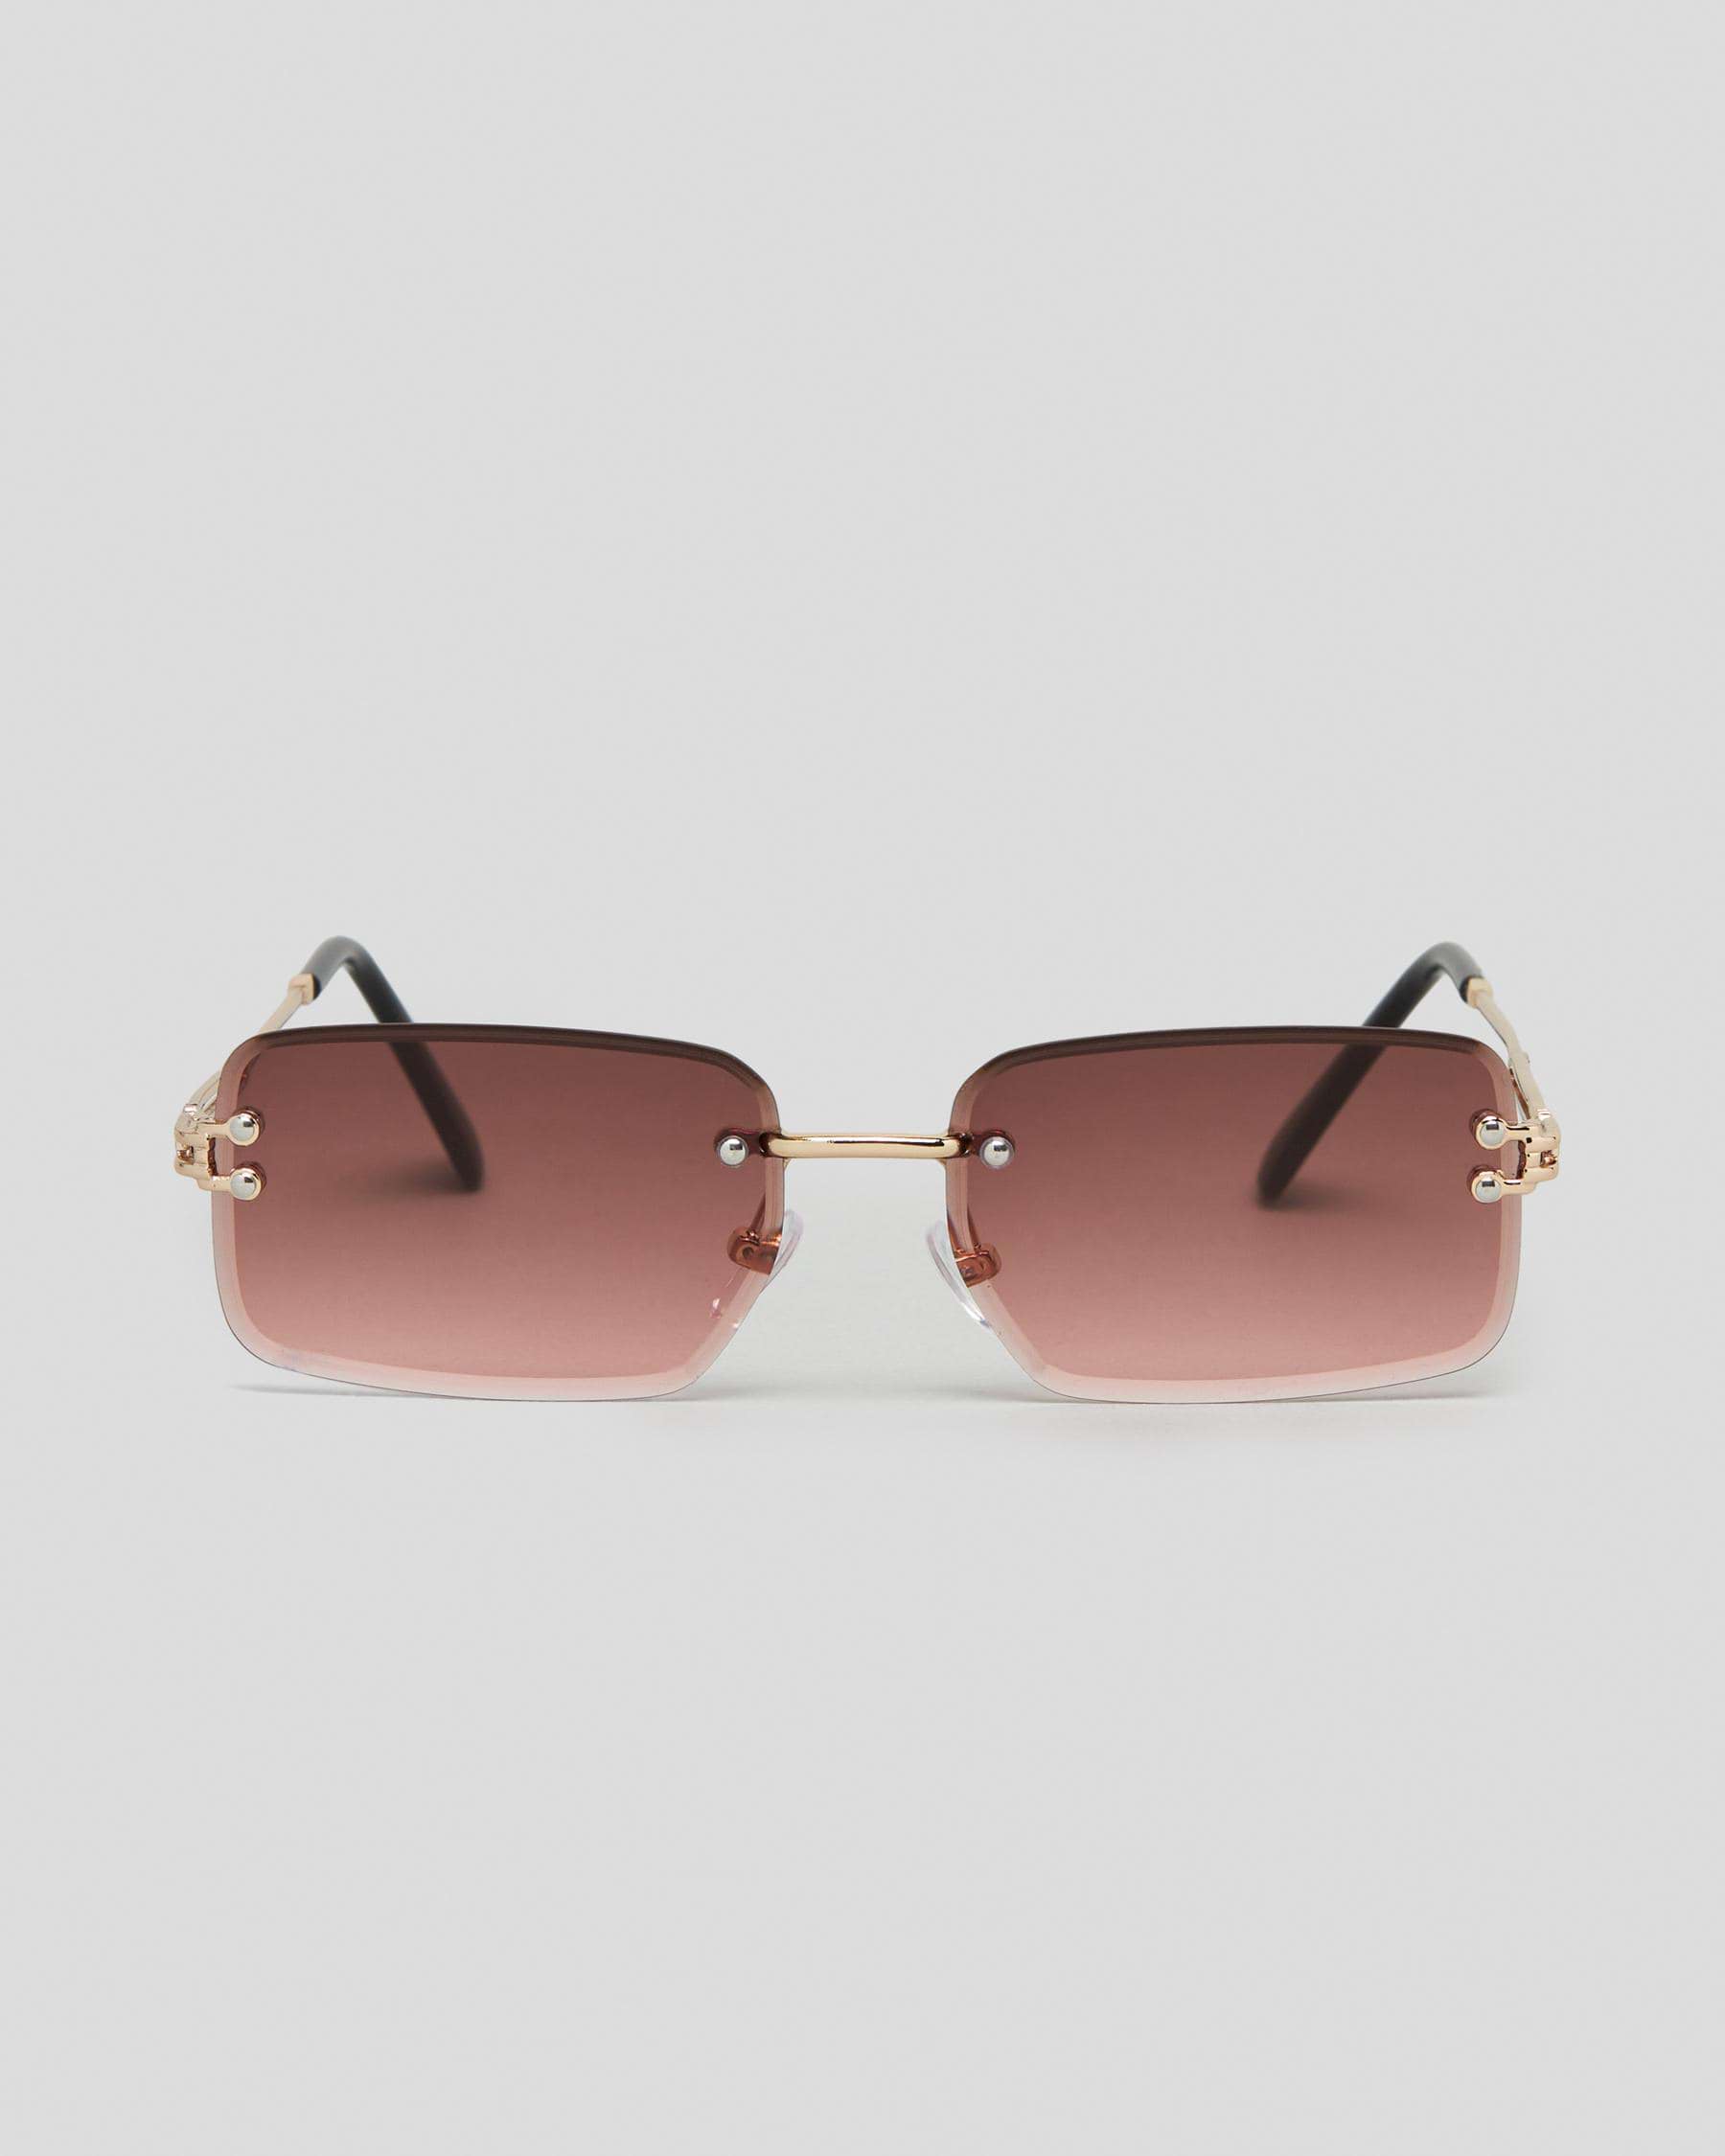 Indie Eyewear Miami Sunglasses In Gold/light Pink - FREE* Shipping ...